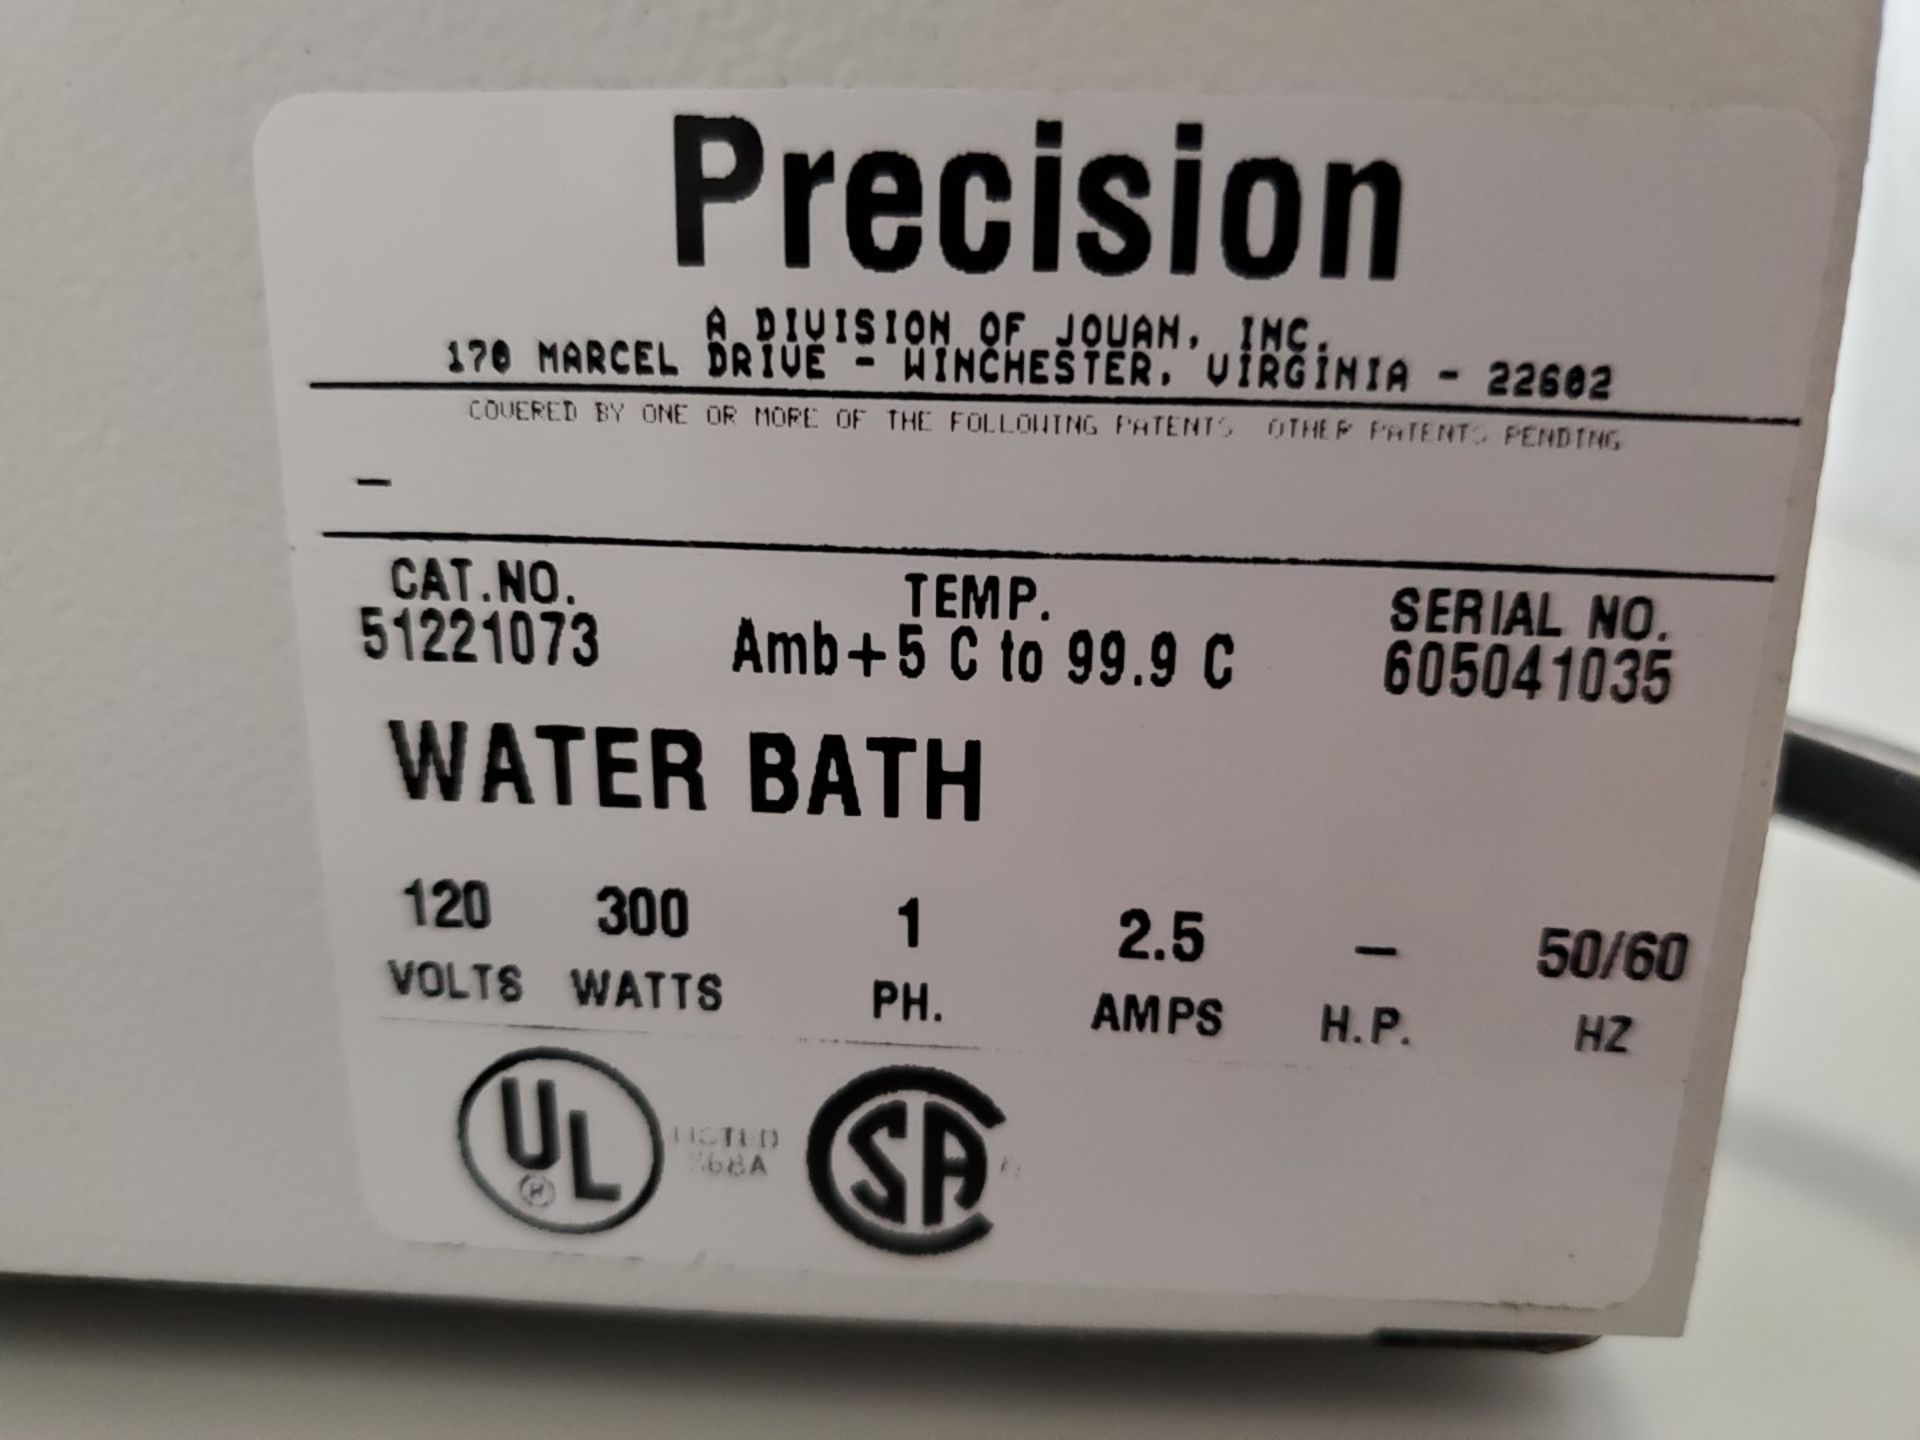 Precision 180 series water bath, 300 watt, 99.9 C max temp. - Image 4 of 4